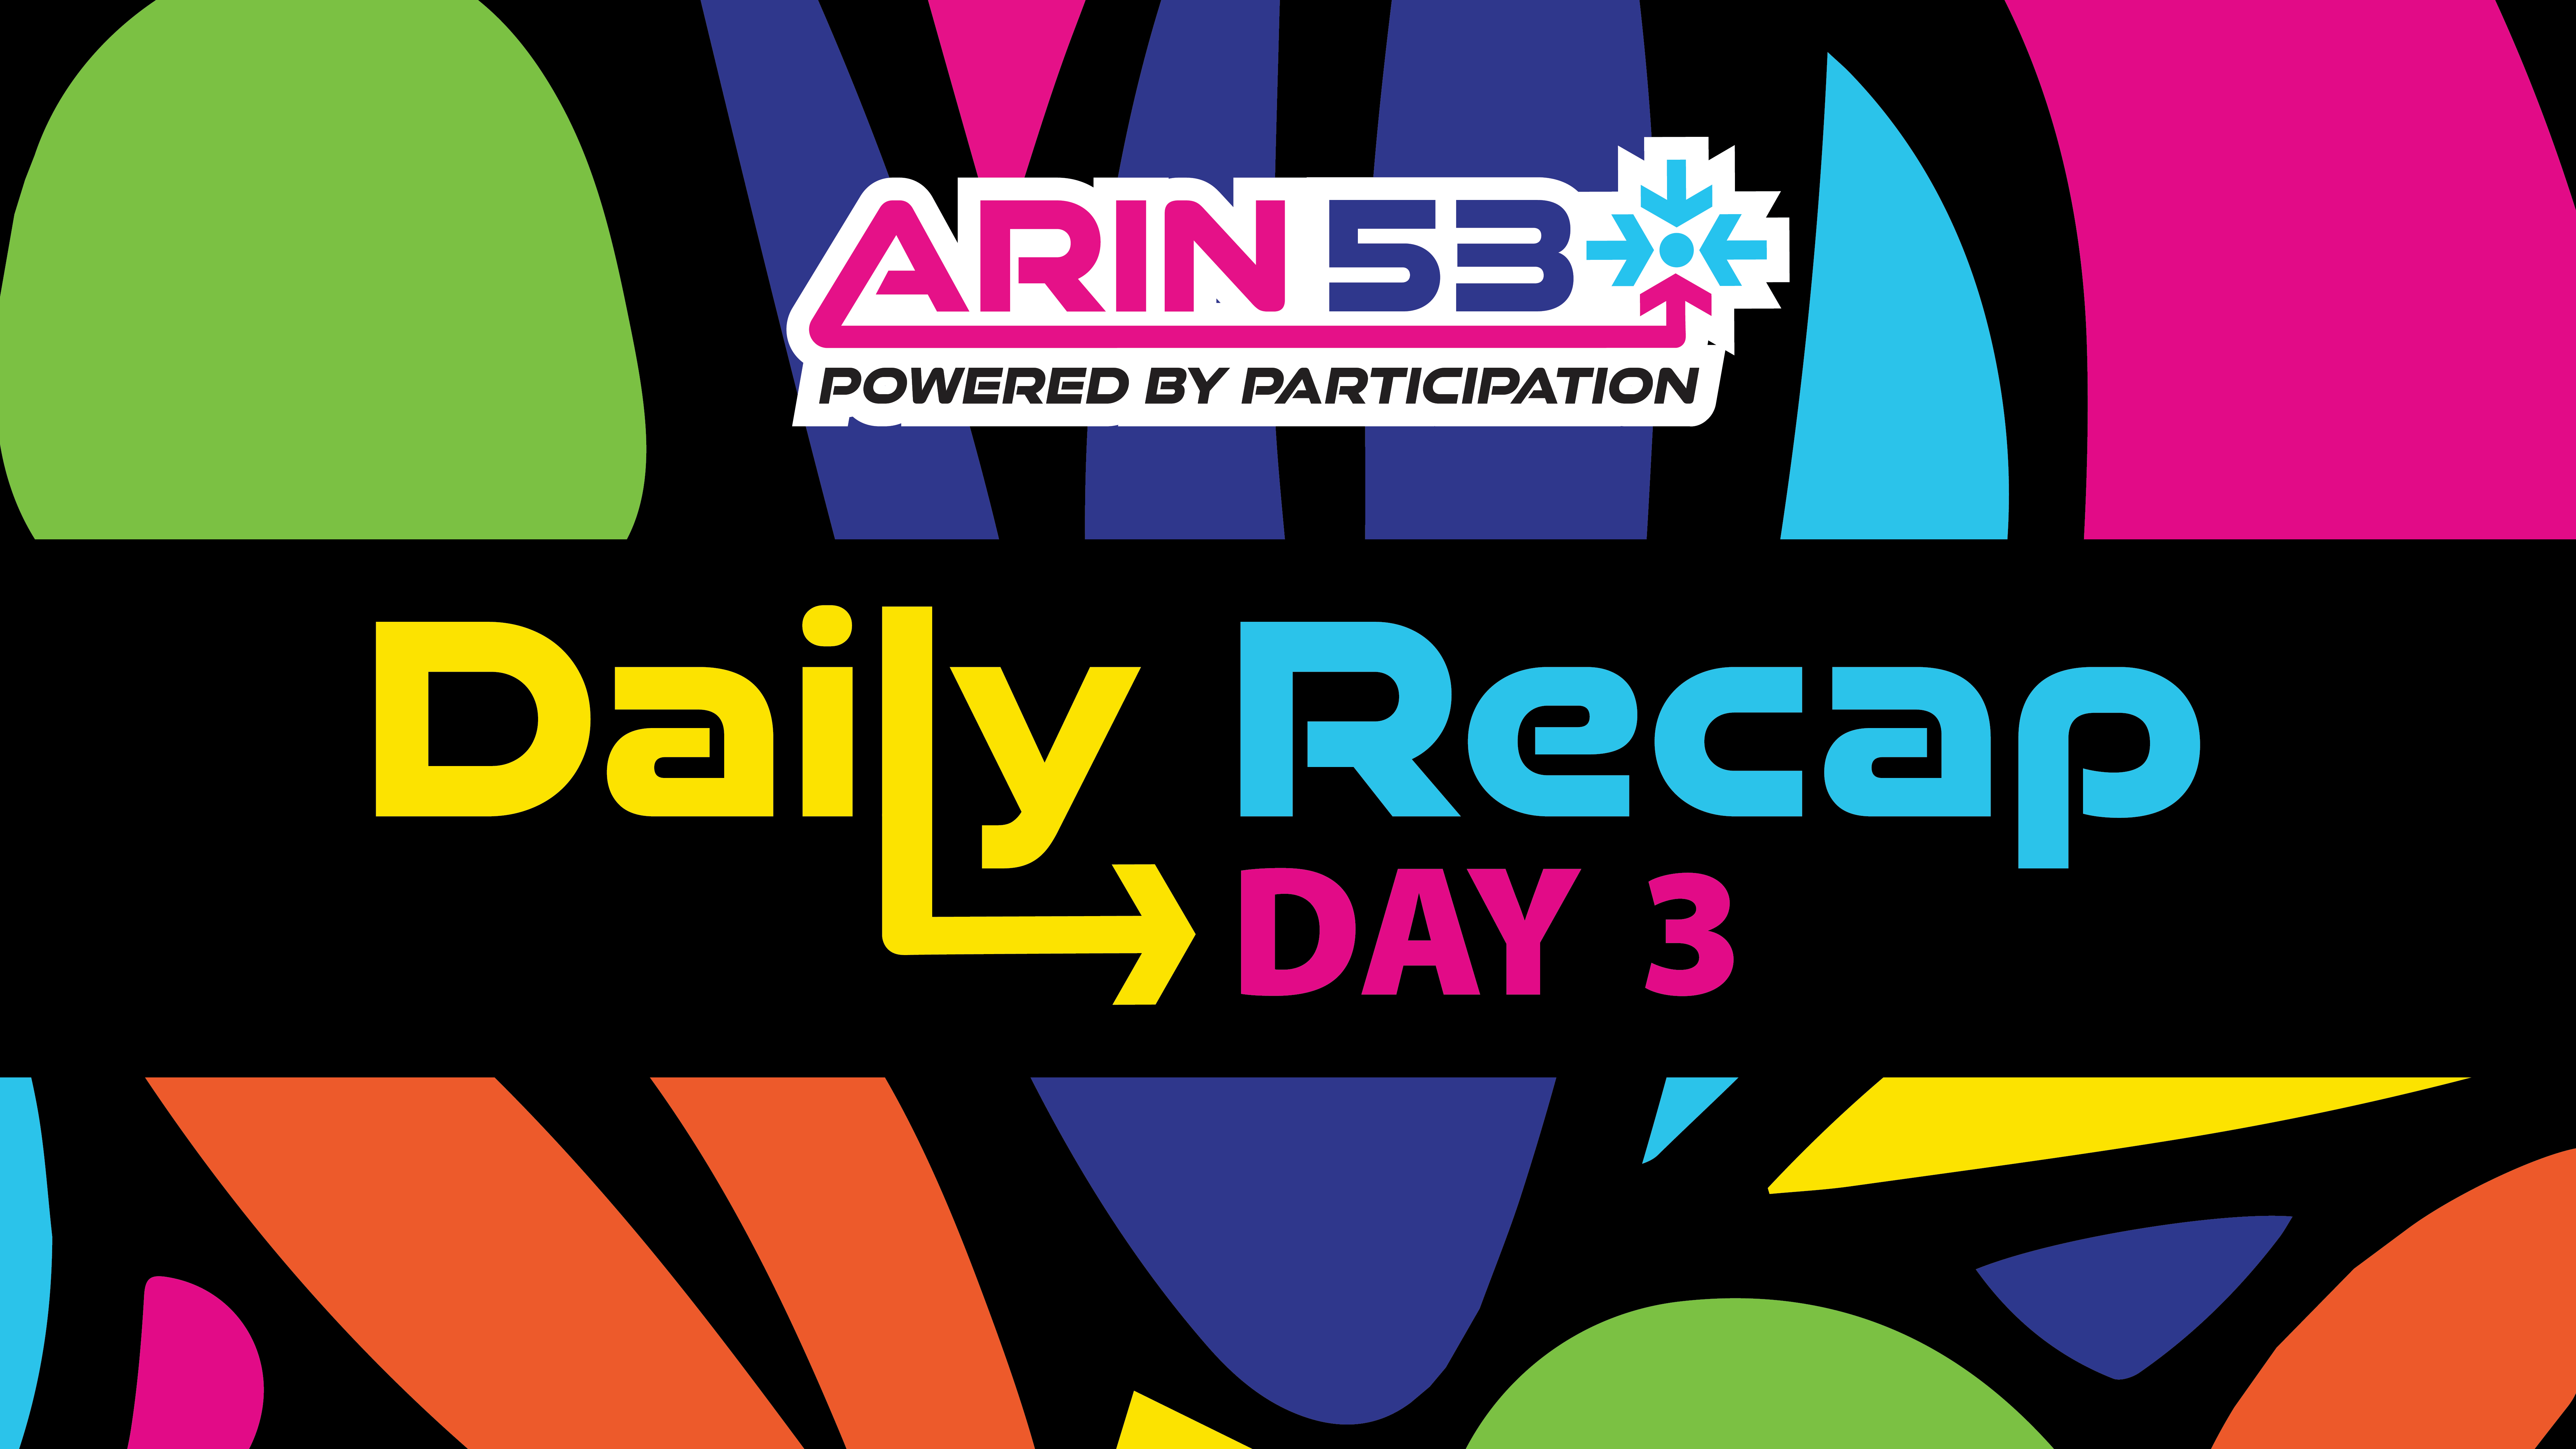 ARIN 53 Day 3 Recap